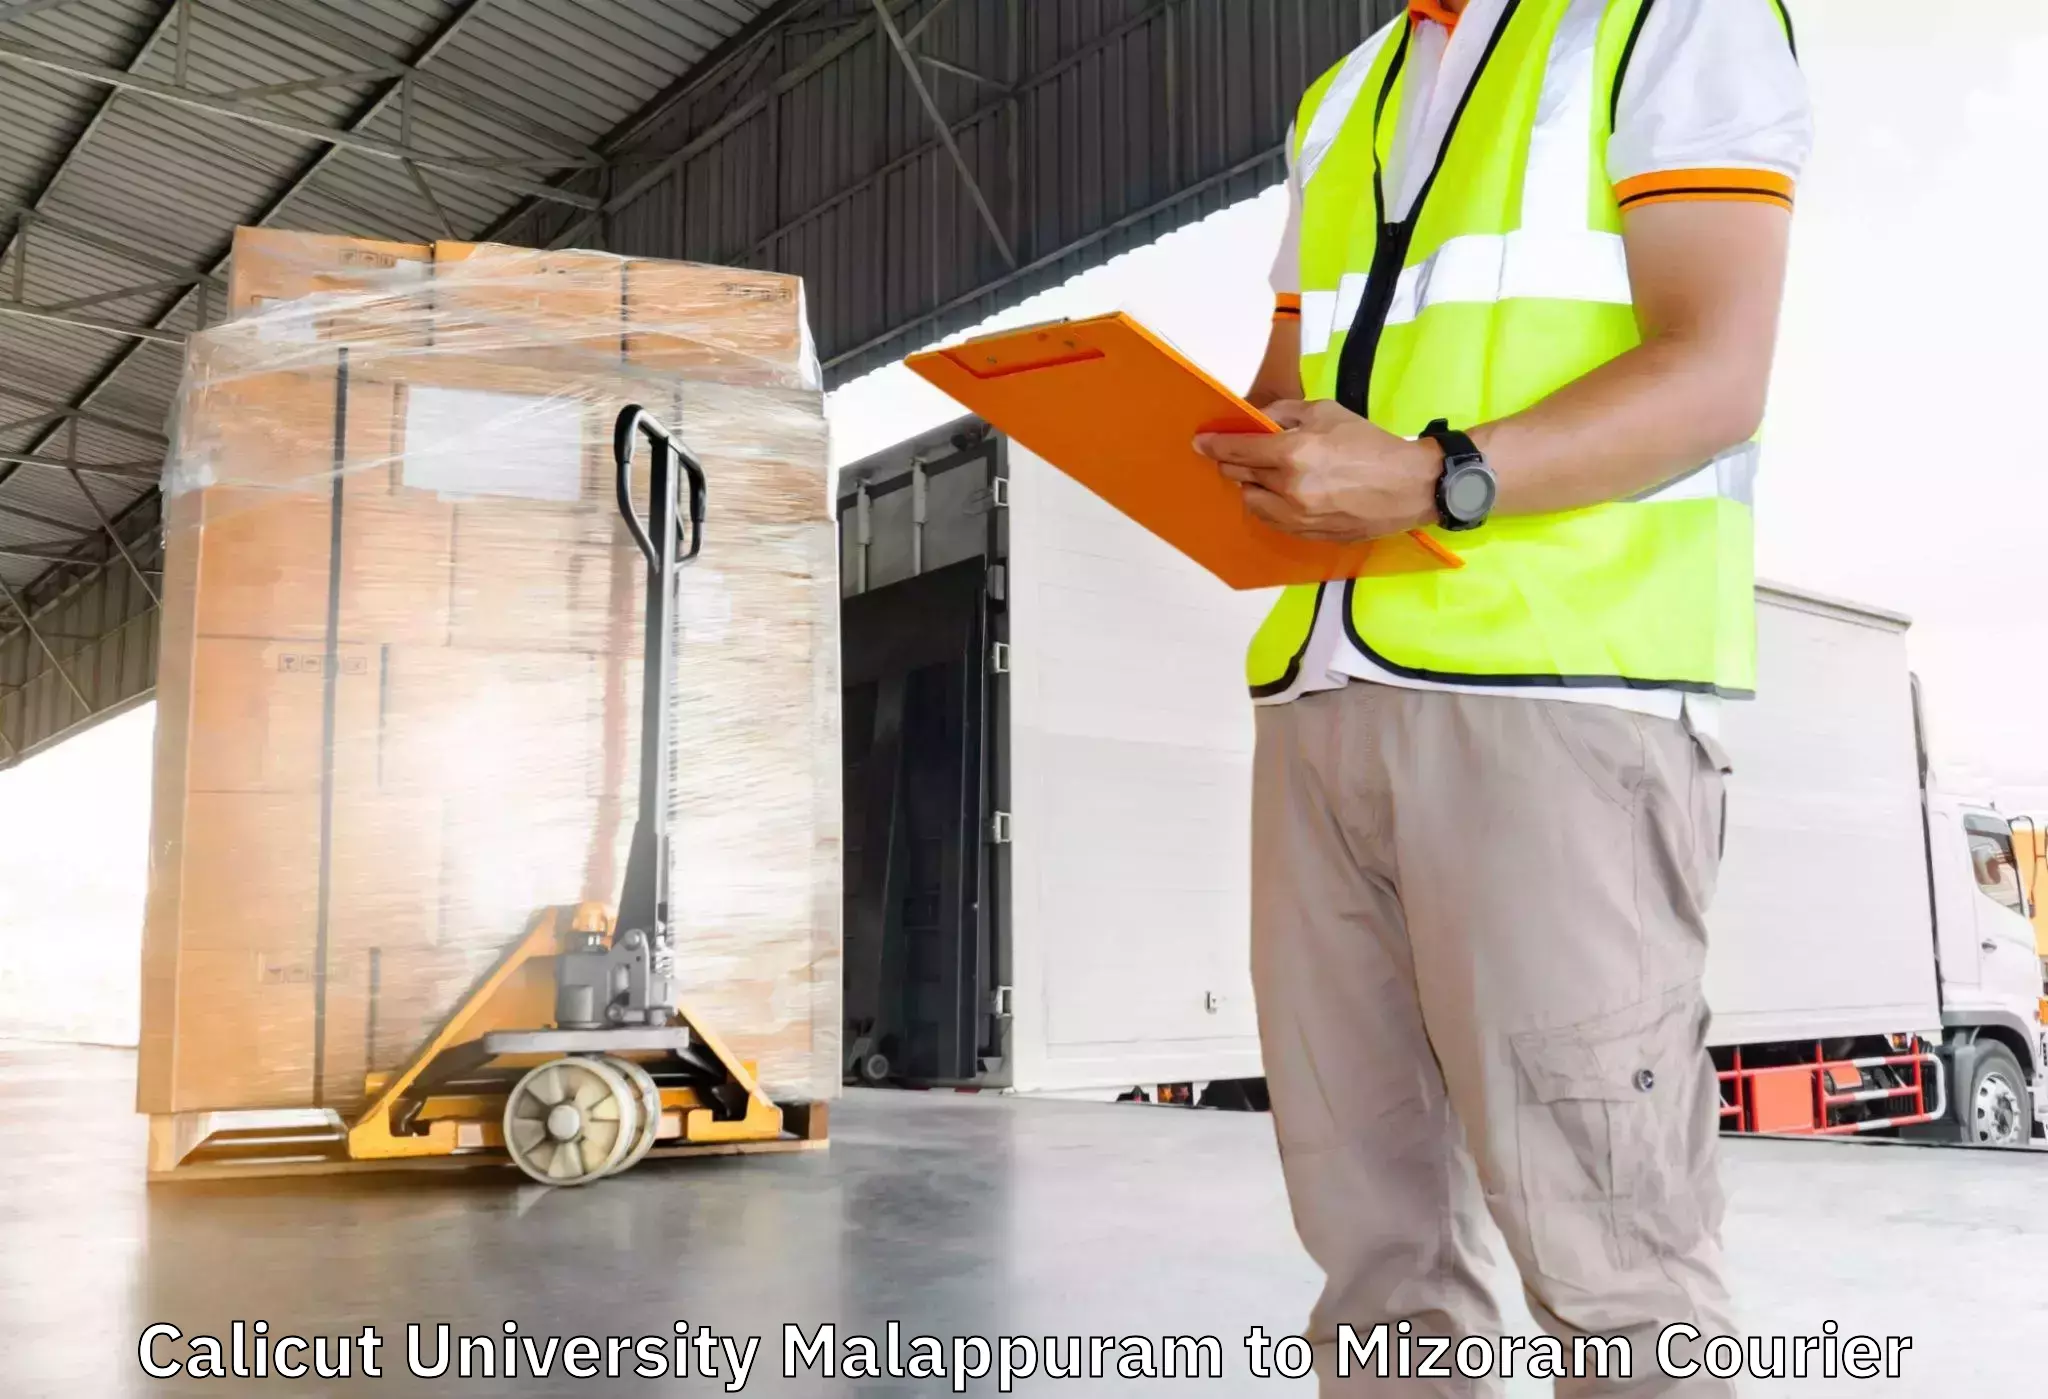 Moving and packing experts Calicut University Malappuram to Mizoram